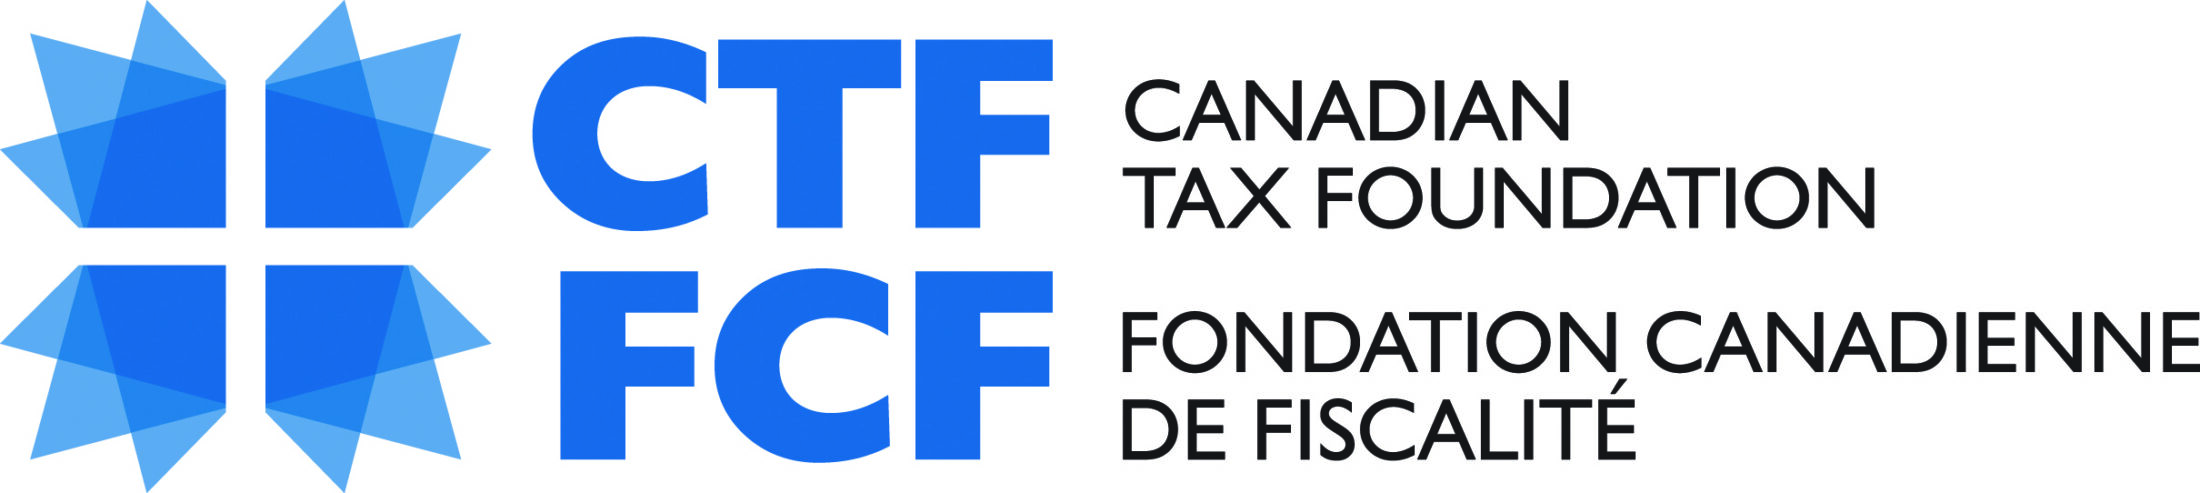 Canadian Tax Foundation logo